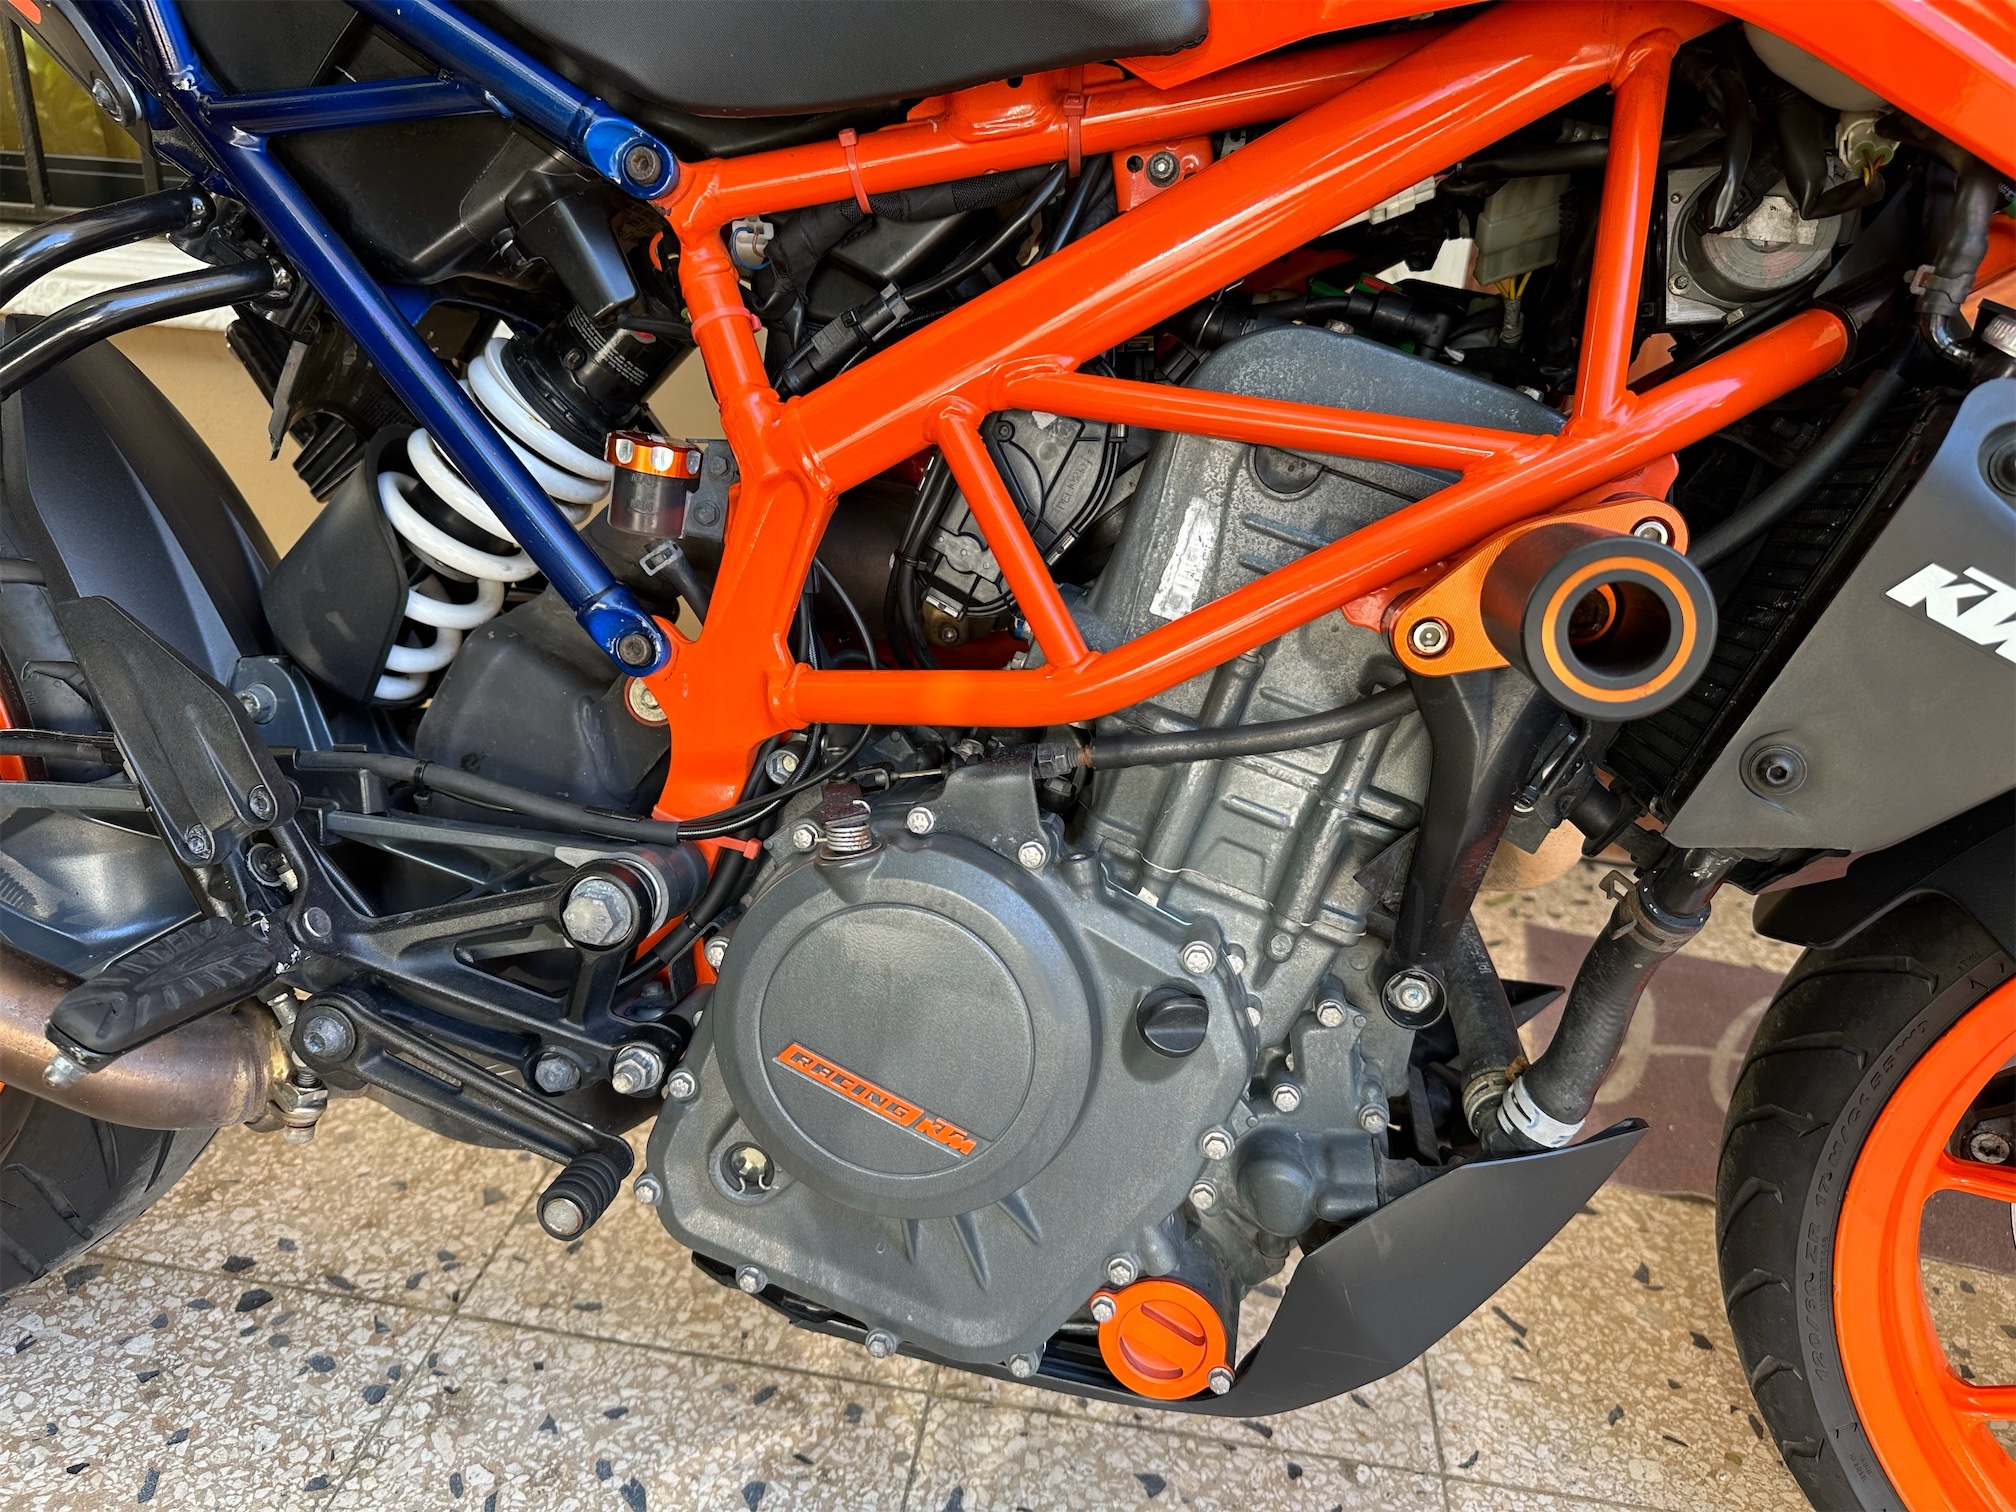 motores y pasolas - Vendo motocicleta KTM 390 DUKE 2019 5